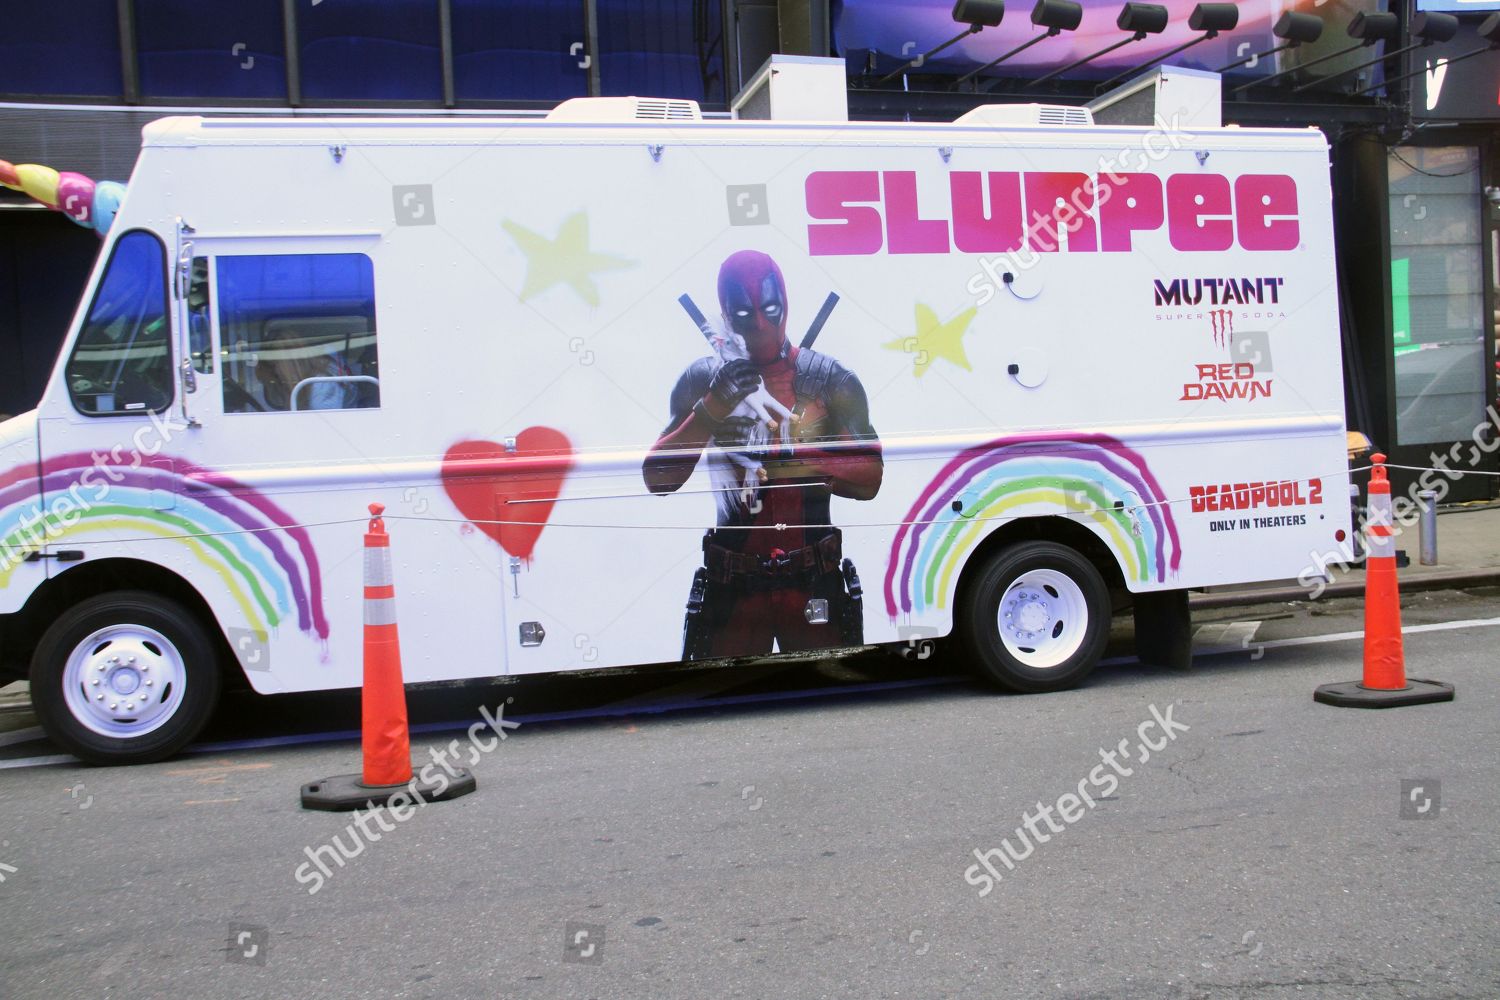 deadpool ice cream truck